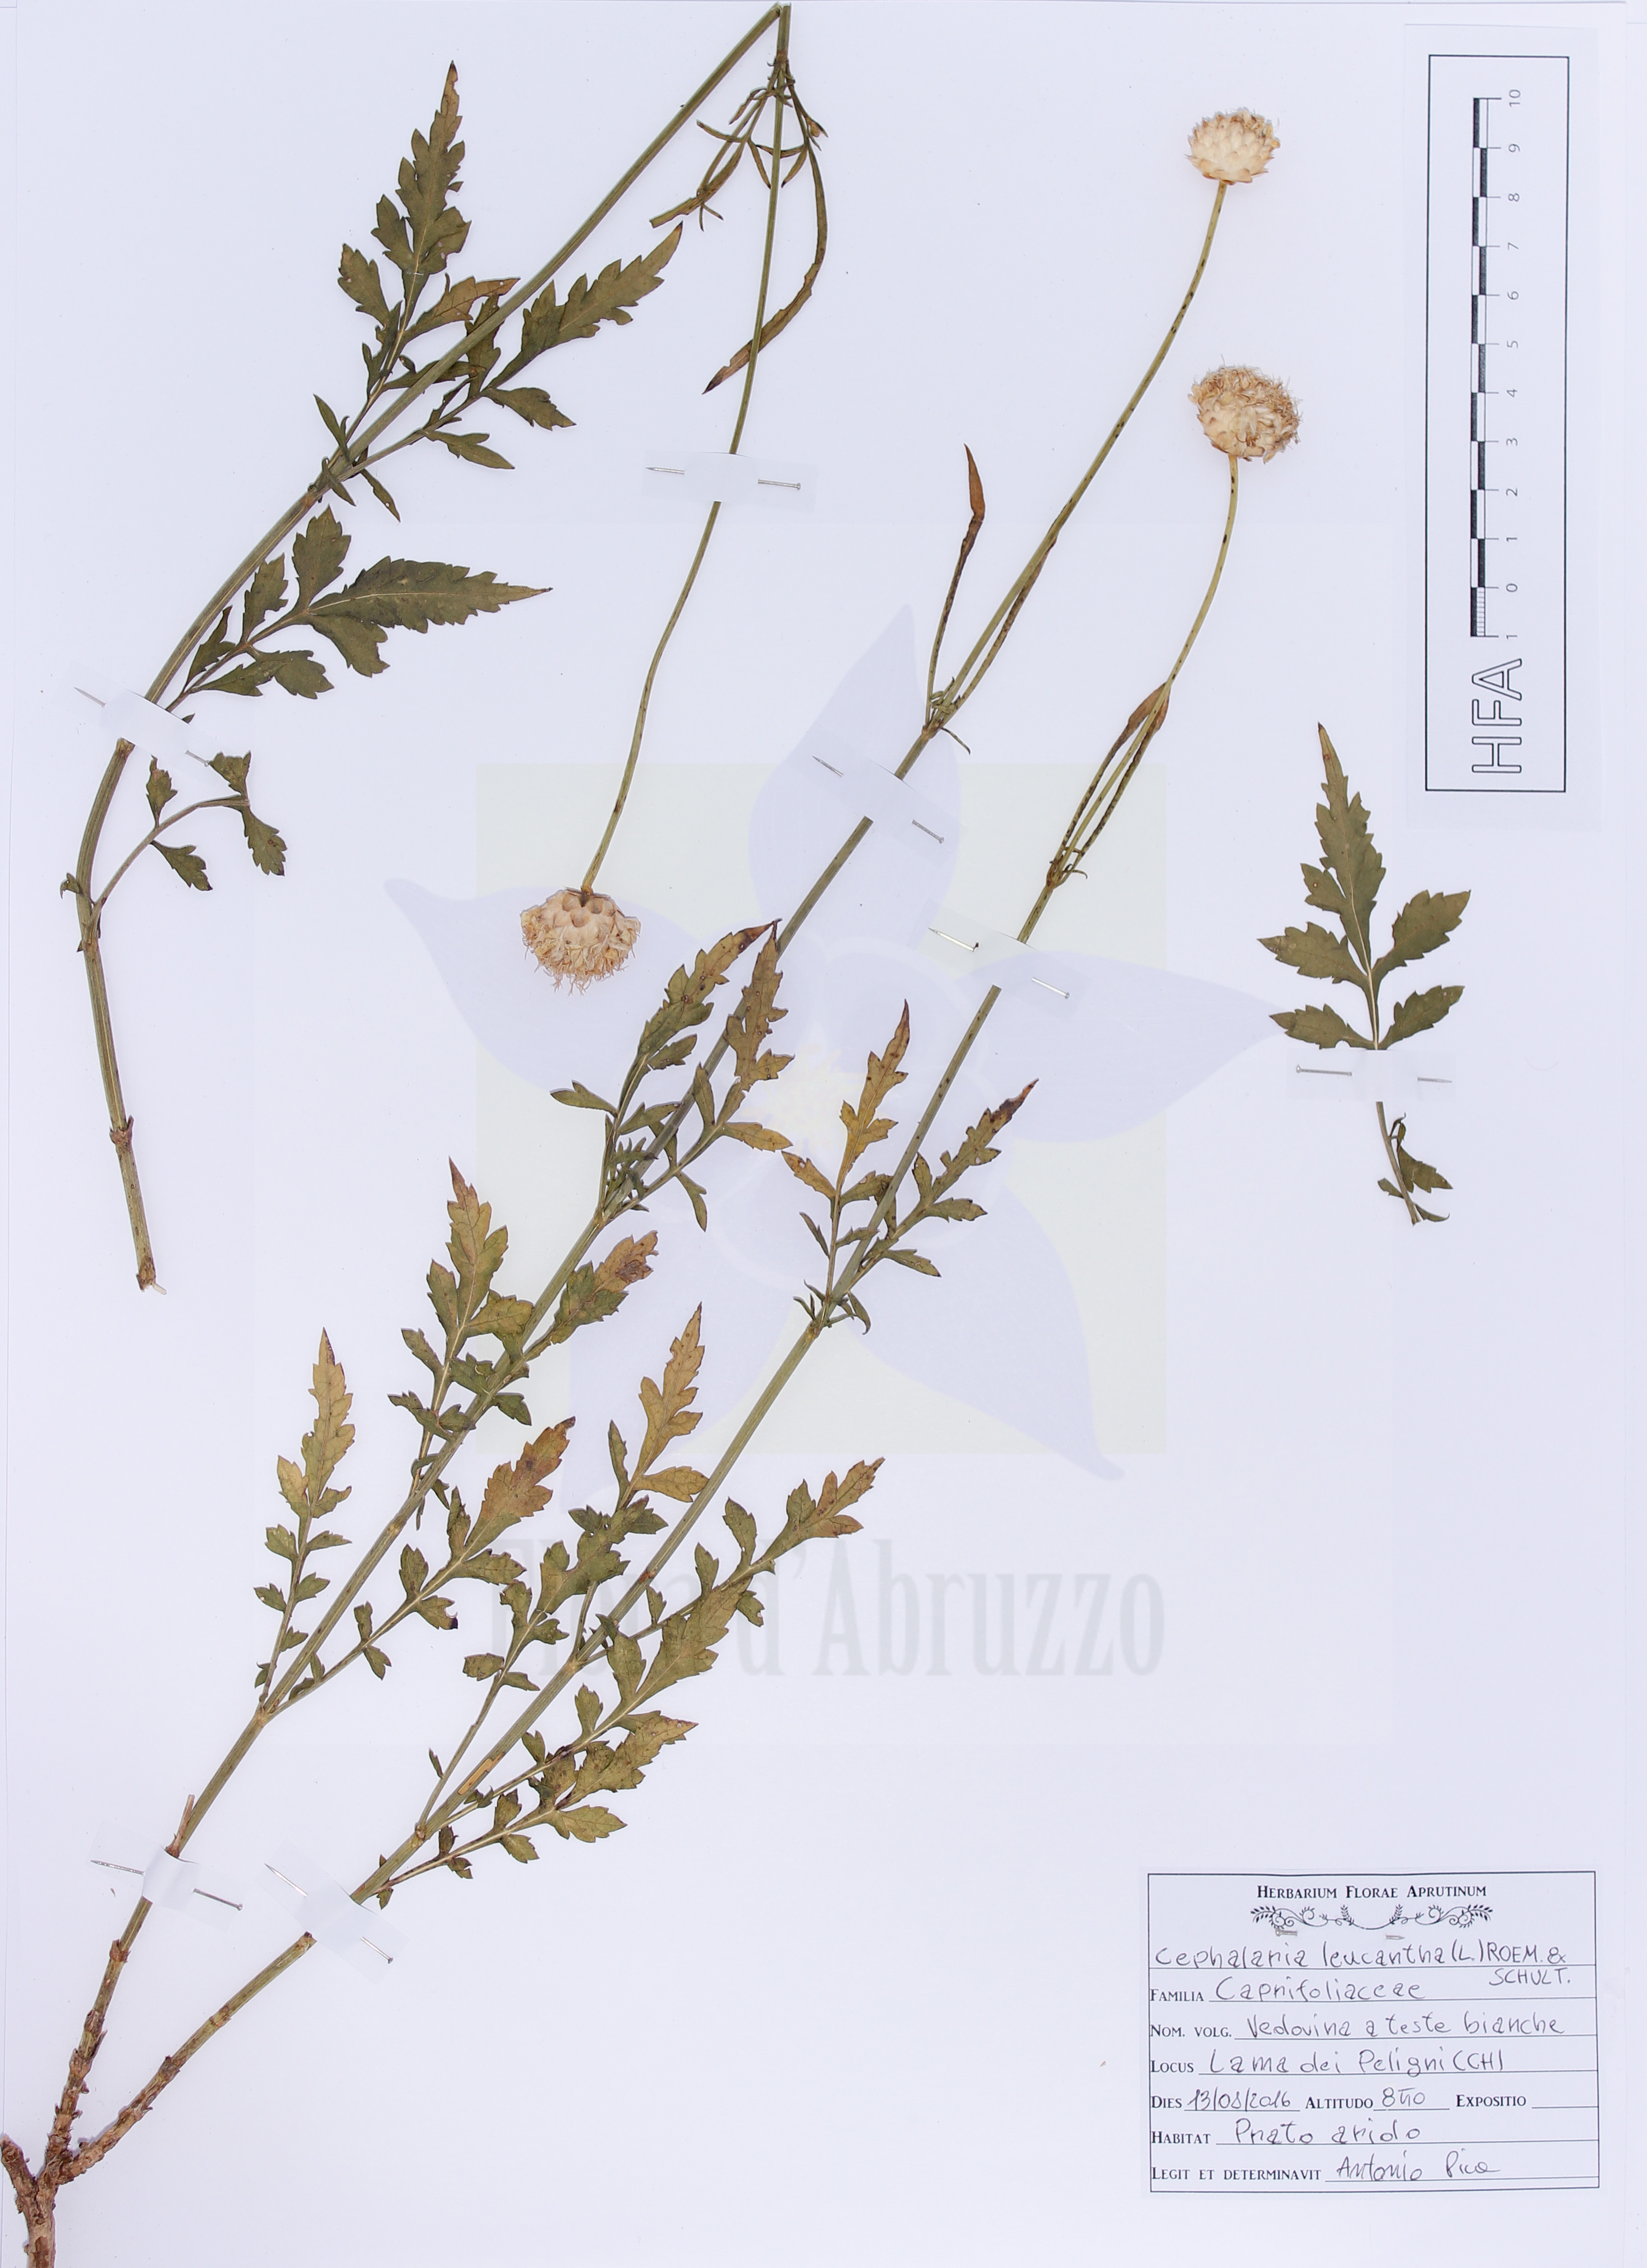 Cephalaria leucantha (L.) Roem. & Schult.